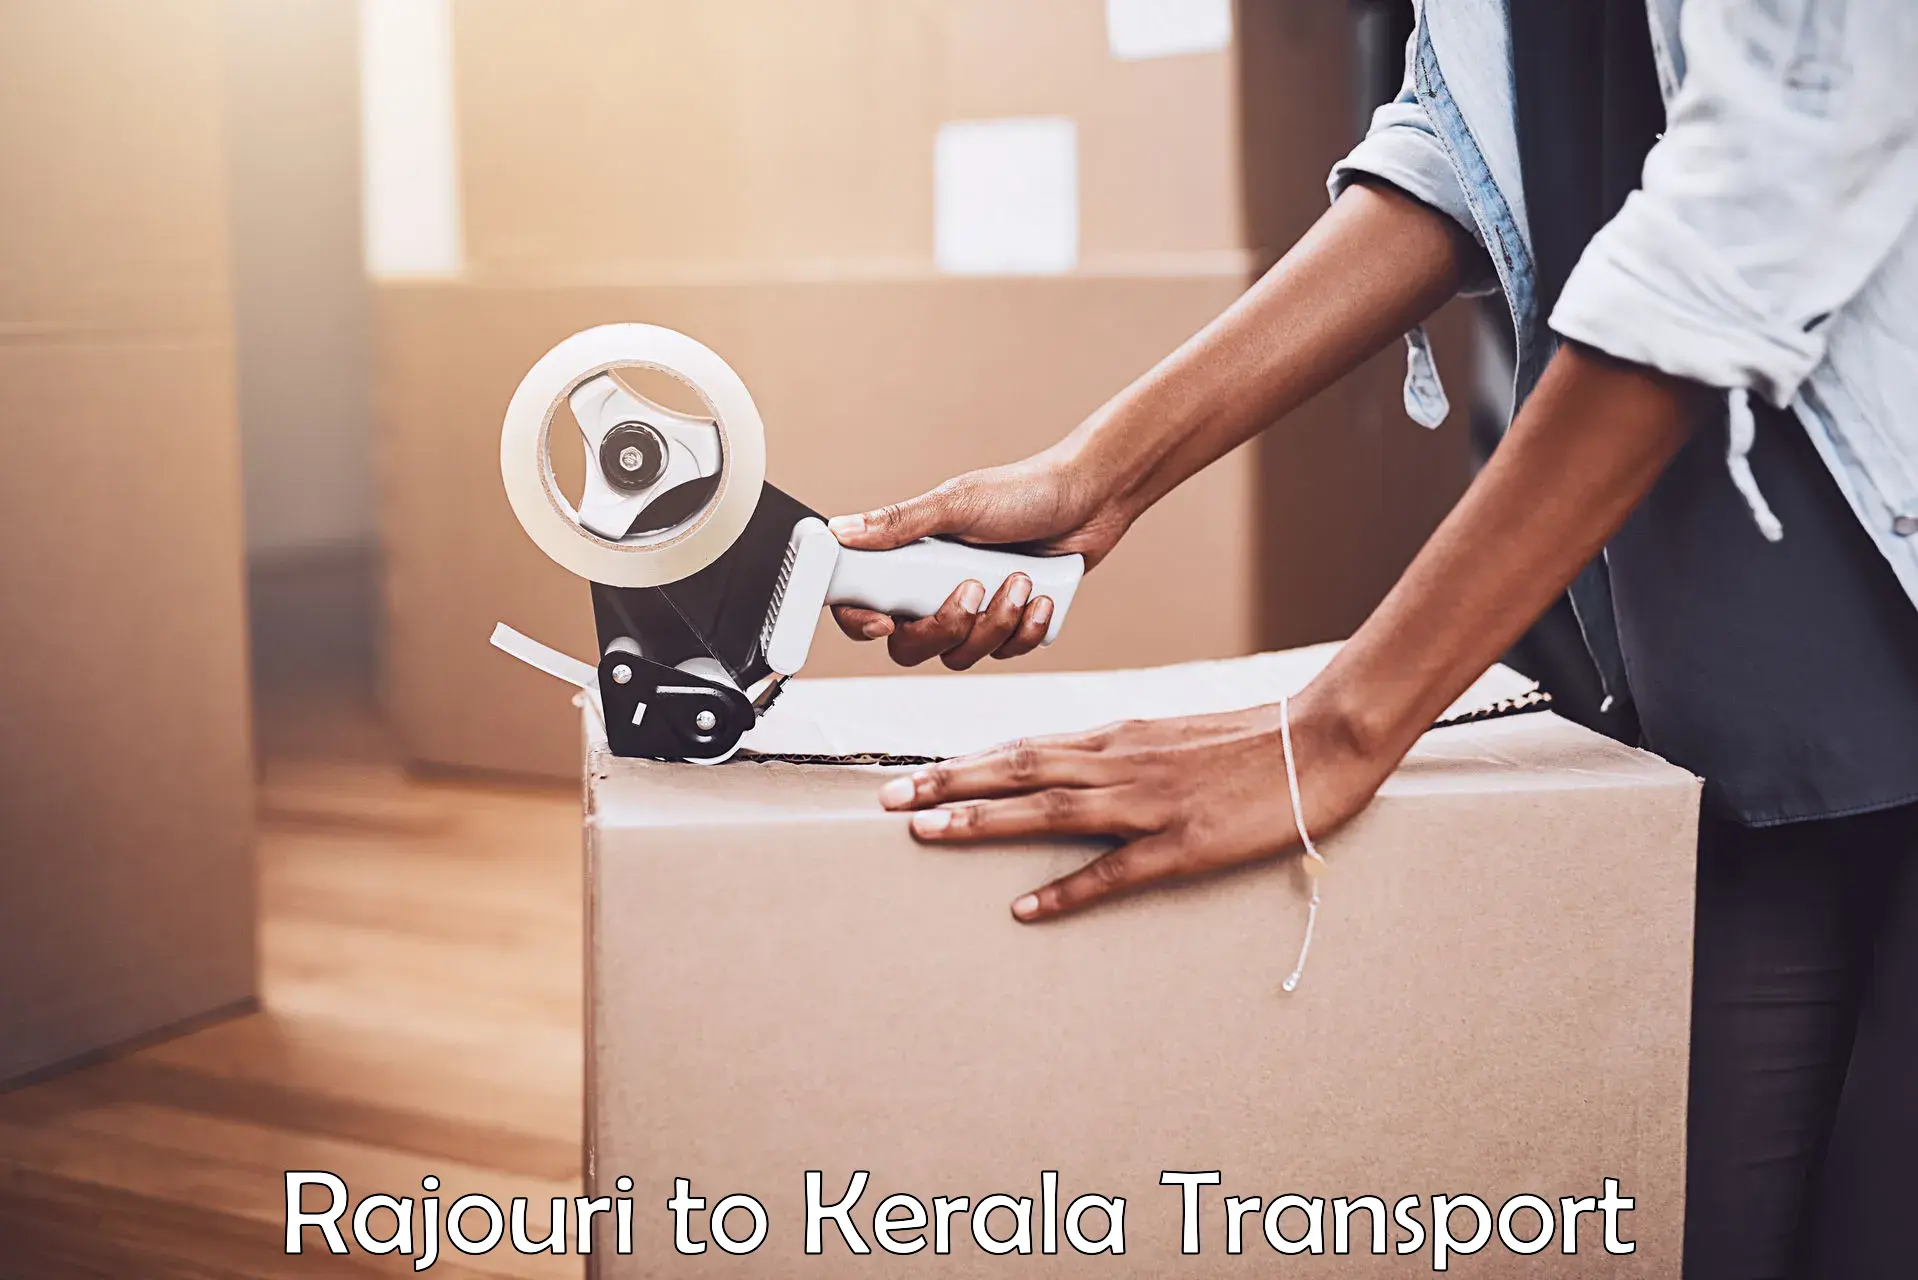 Daily transport service Rajouri to Thalassery